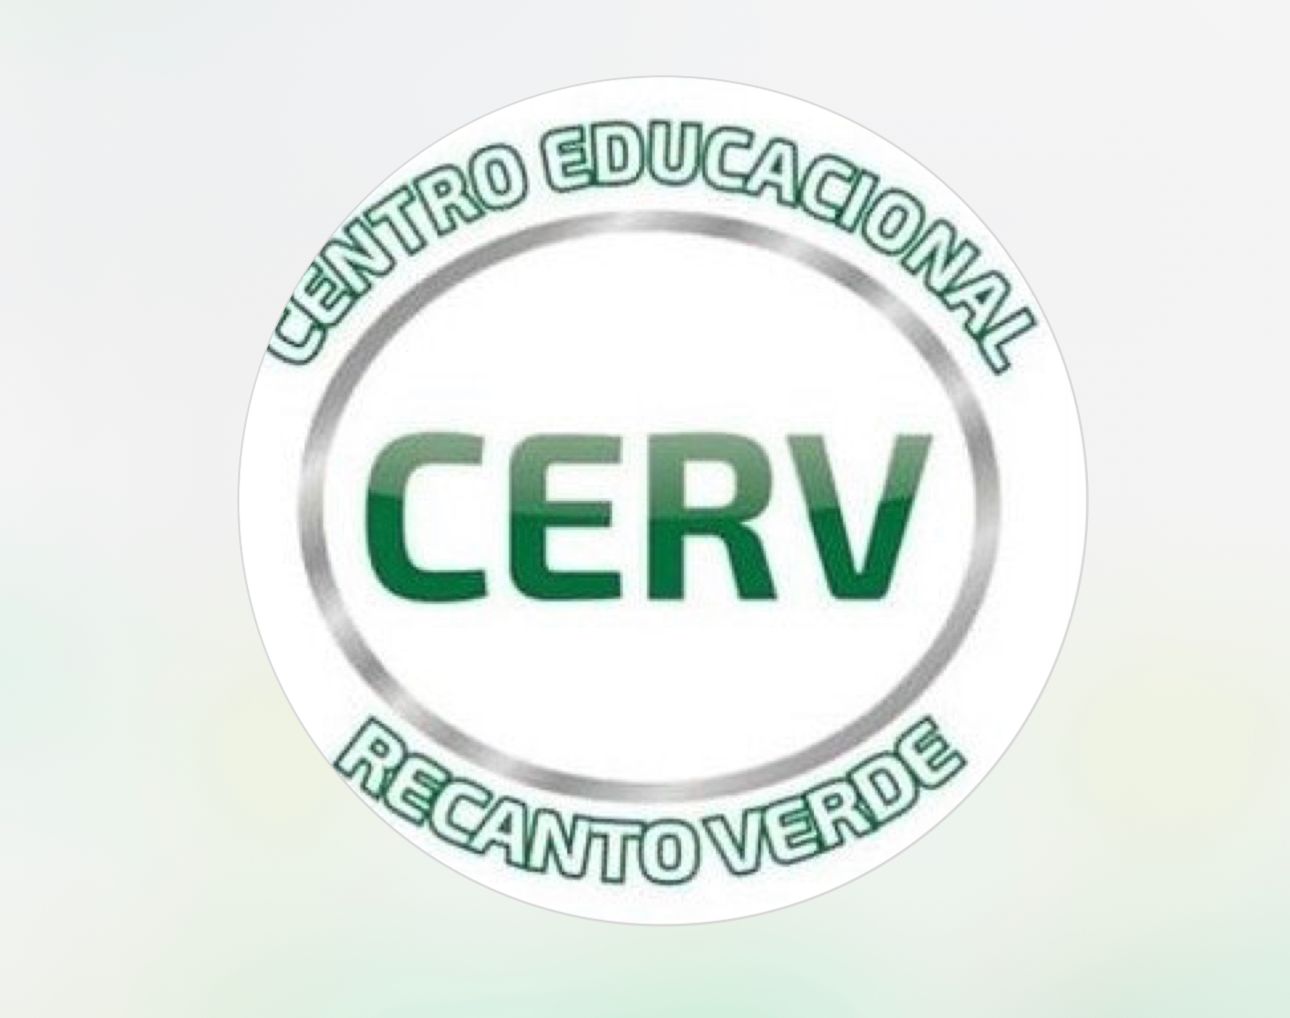 Centro Educacional Recanto Verde